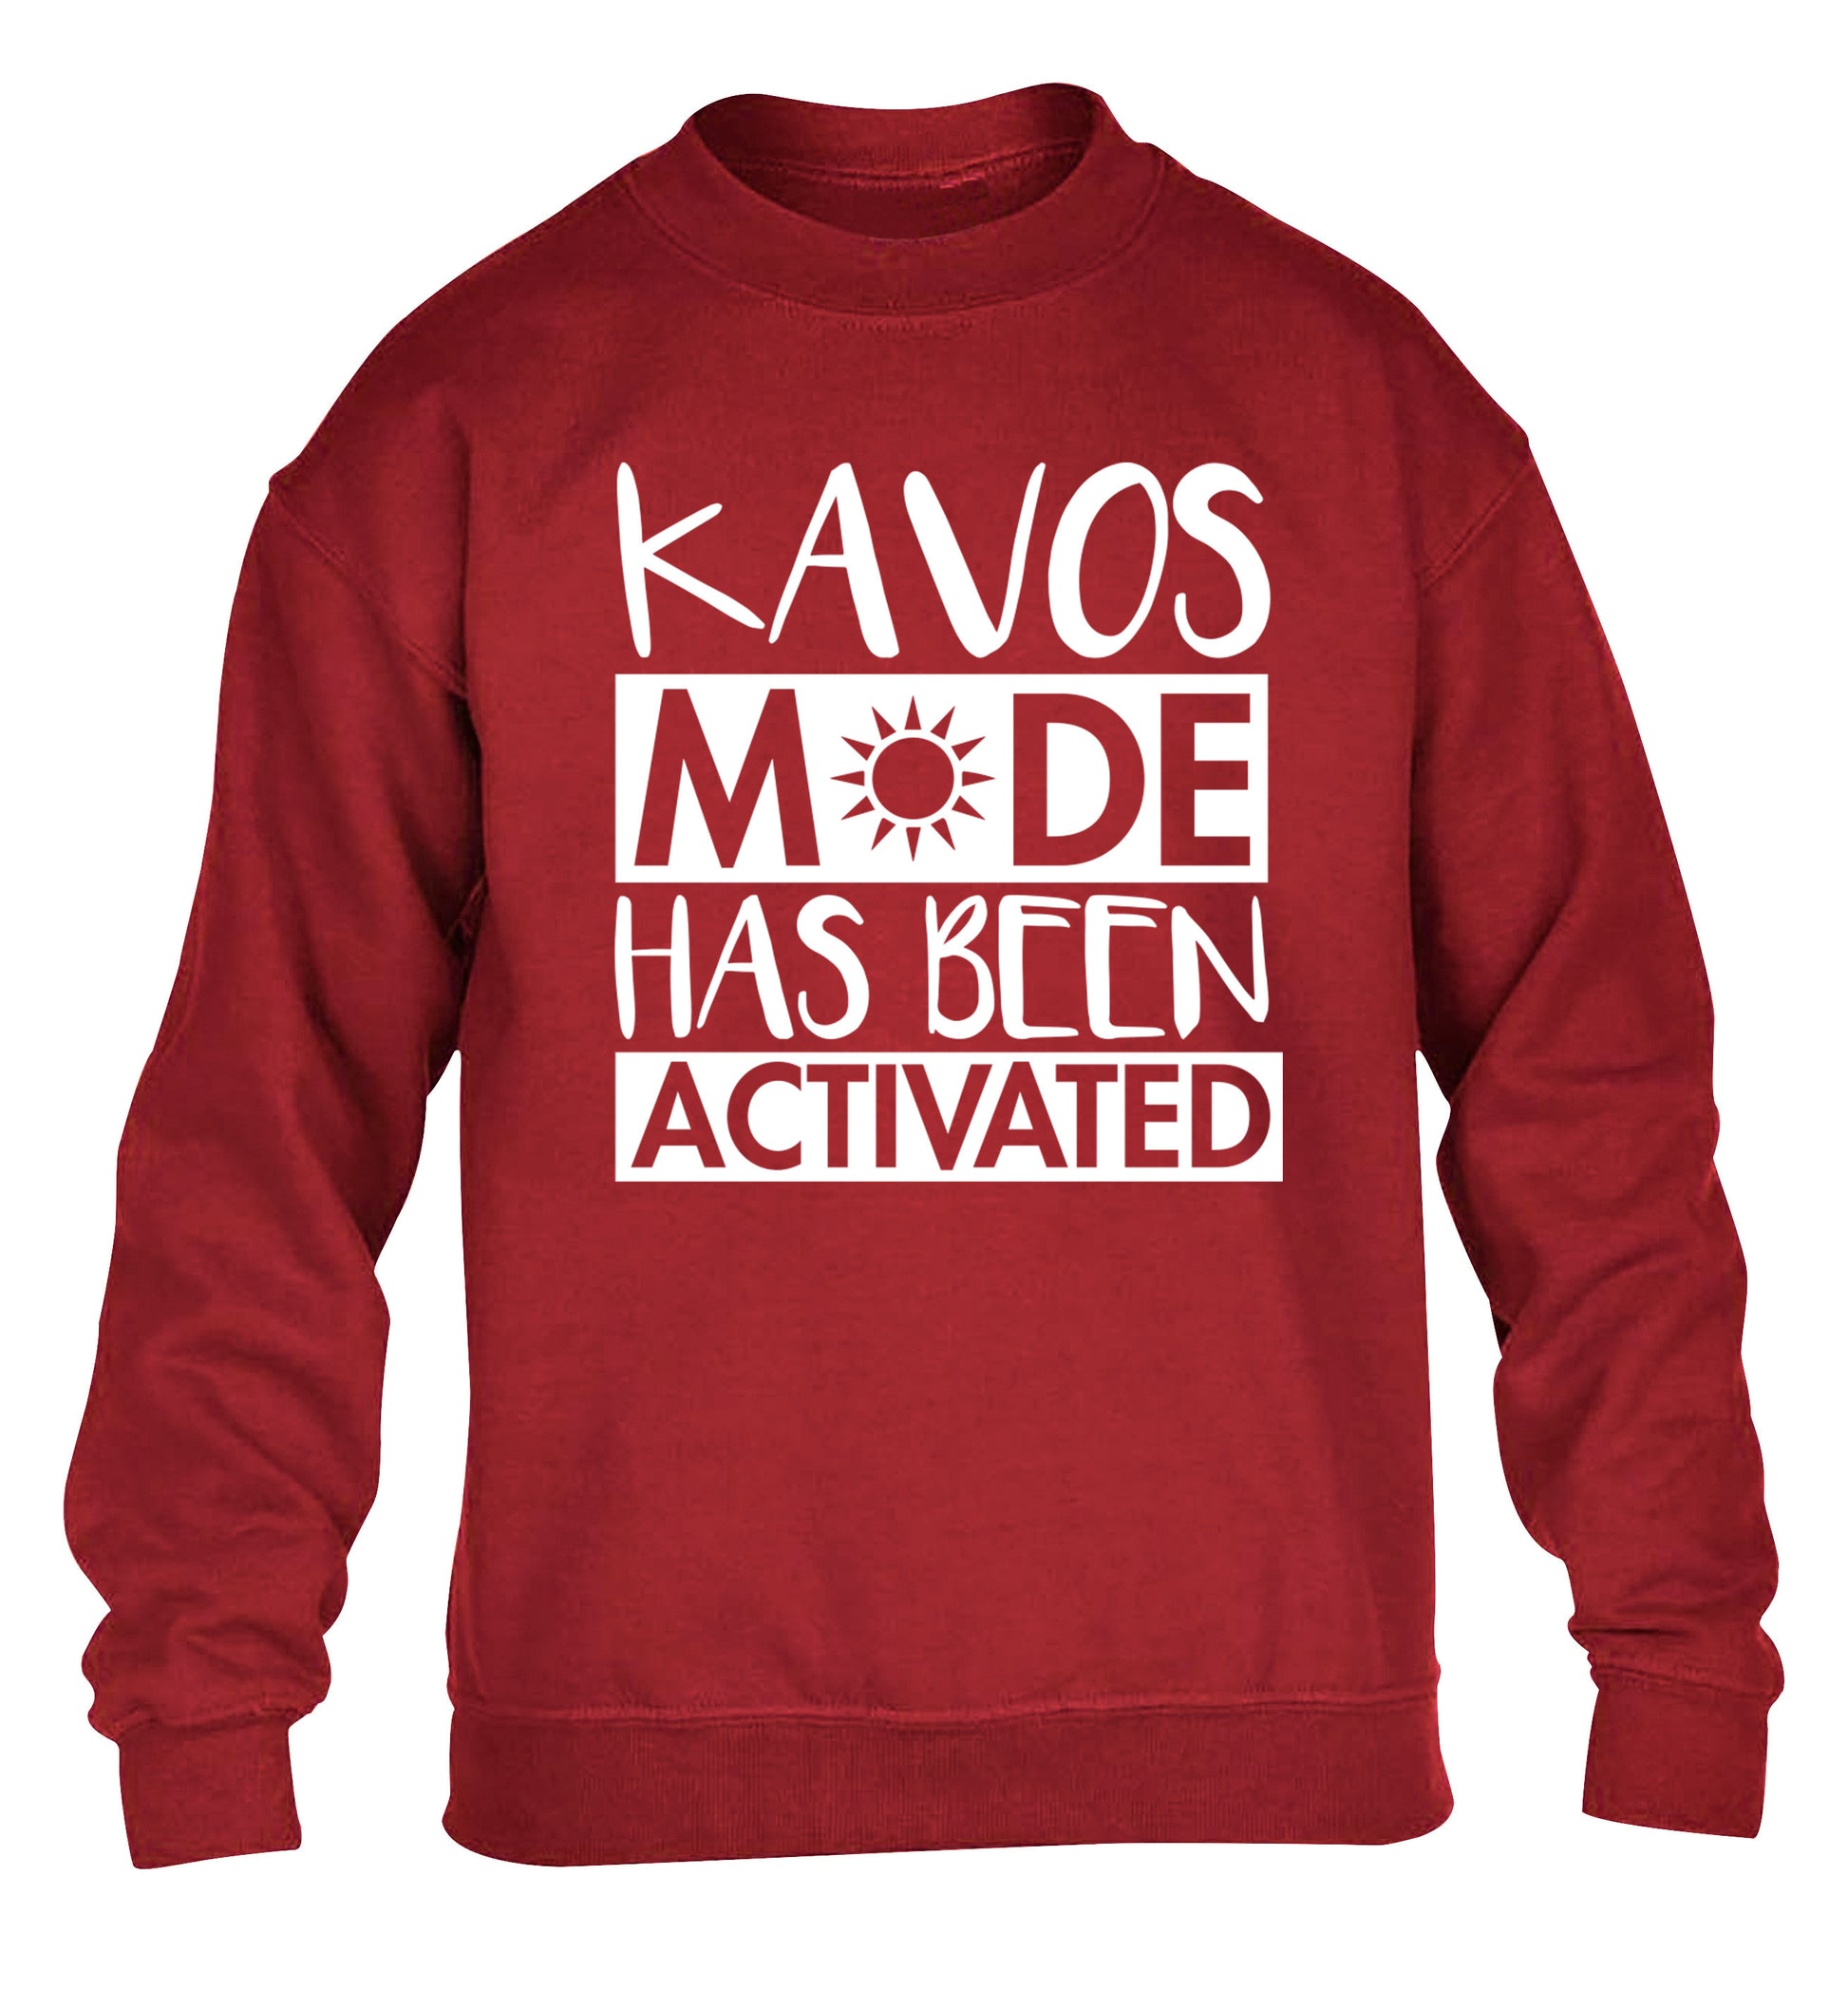 Kavos mode has been activated children's grey sweater 12-14 Years